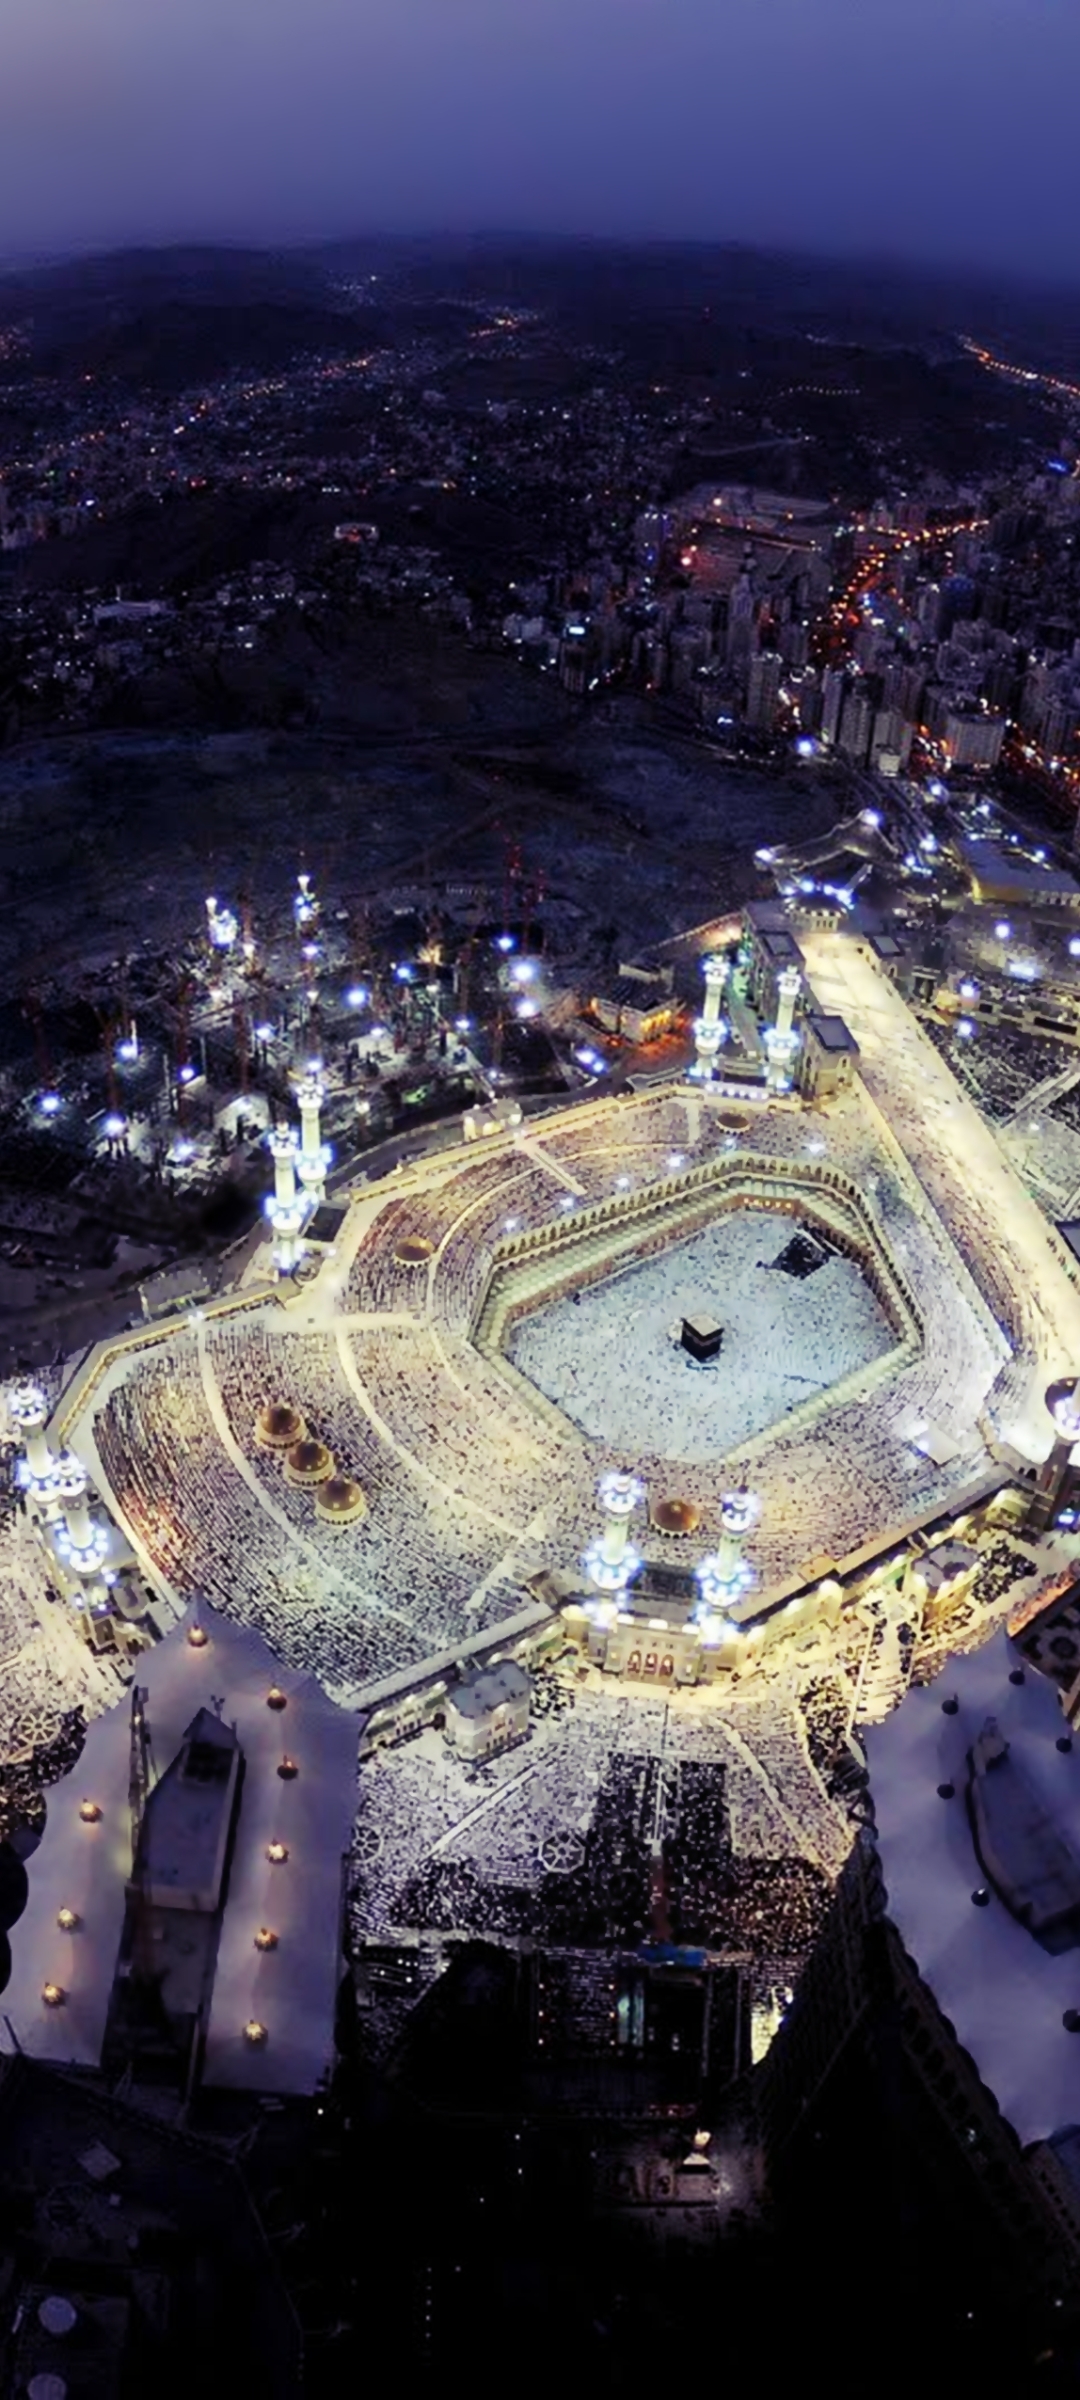 islam, masjid al haram (mecca), mecca, kaaba, religious, saudi arabia, mosque, mosques cell phone wallpapers